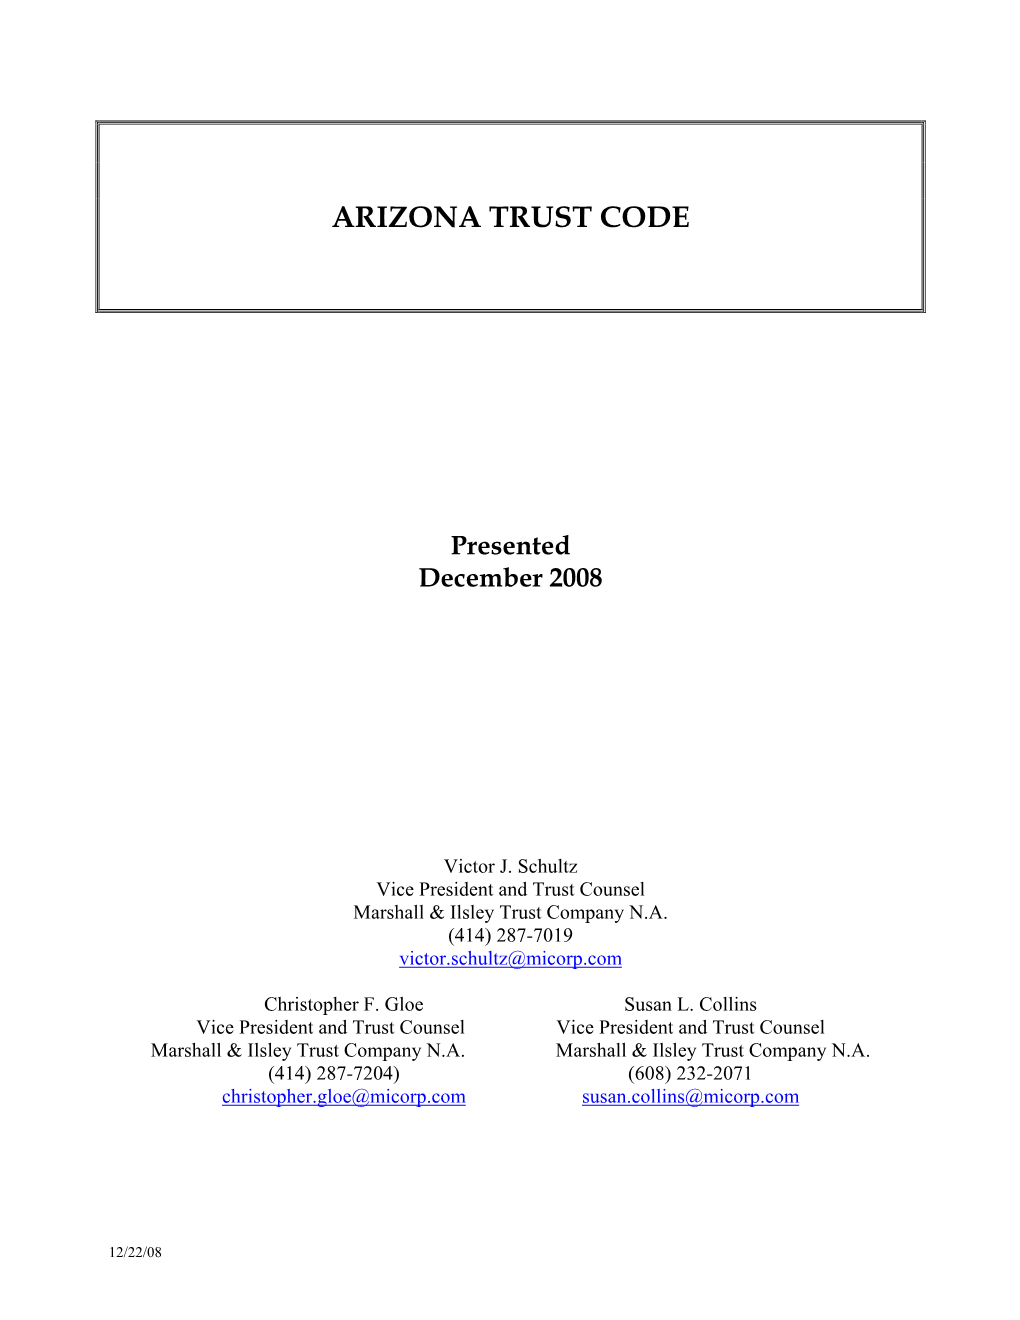 Arizona Trust Code